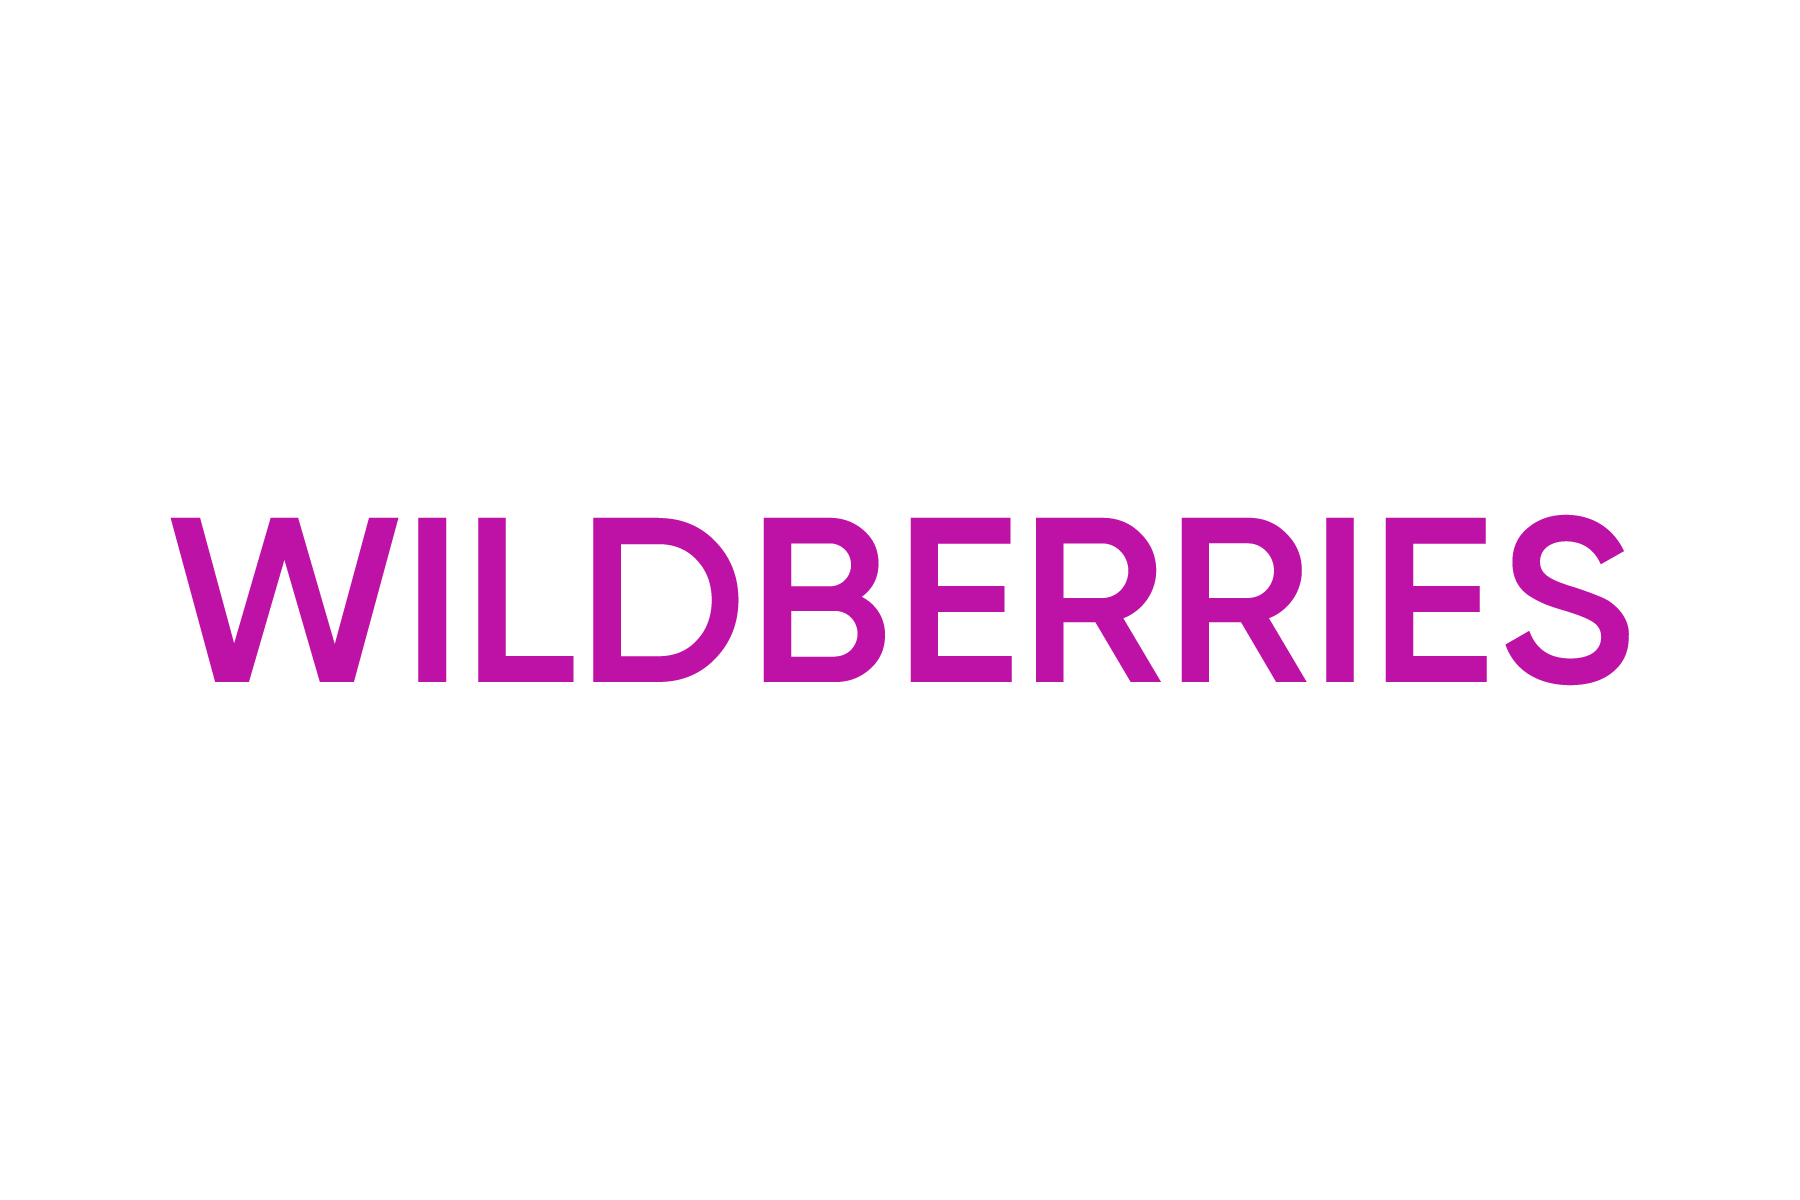 Вб пей. Wildberries. Wildberries лого. Надпись Wildberries. Логотип Wildberries на прозрачном фоне.